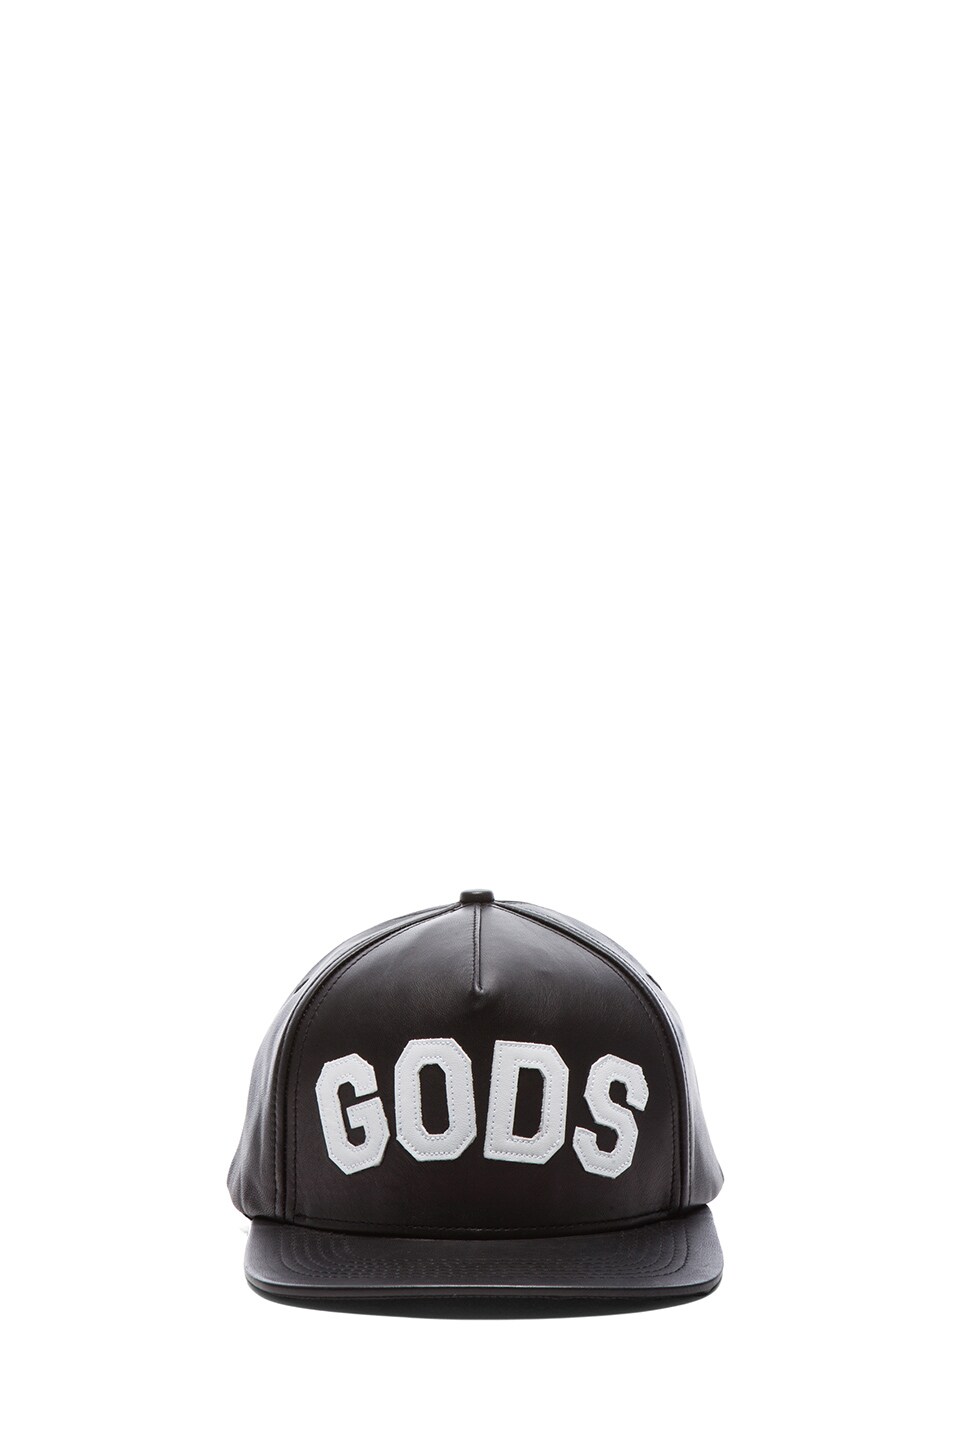 Image 1 of Stampd Leather Gods Hat in Black